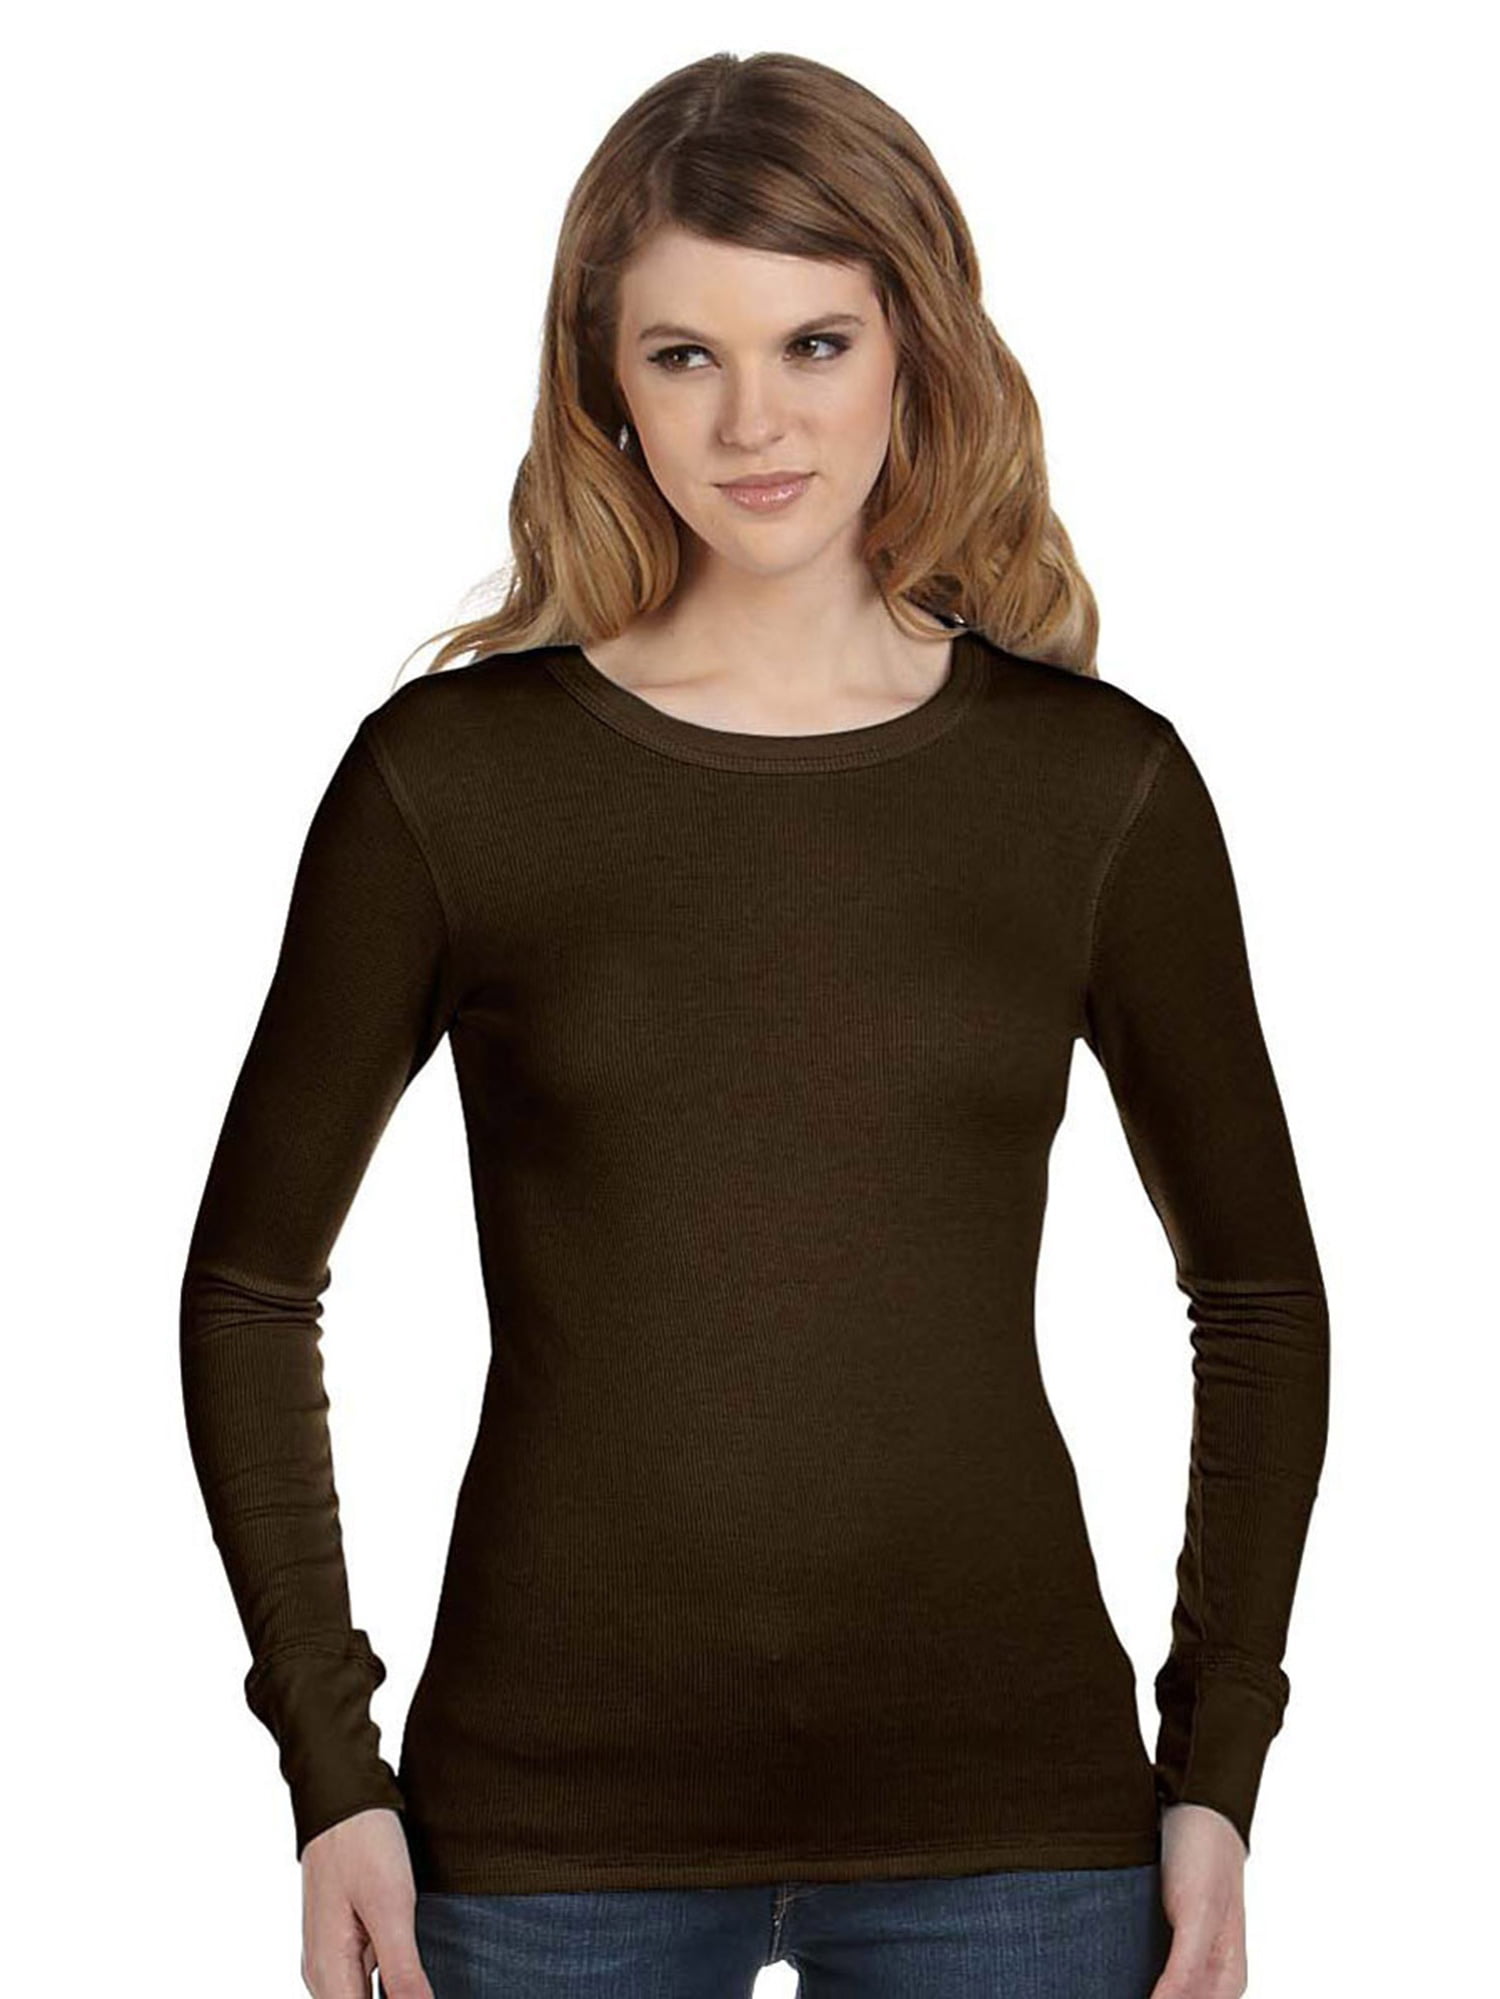 Bella Womens Long Sleeve Thermal T-Shirt